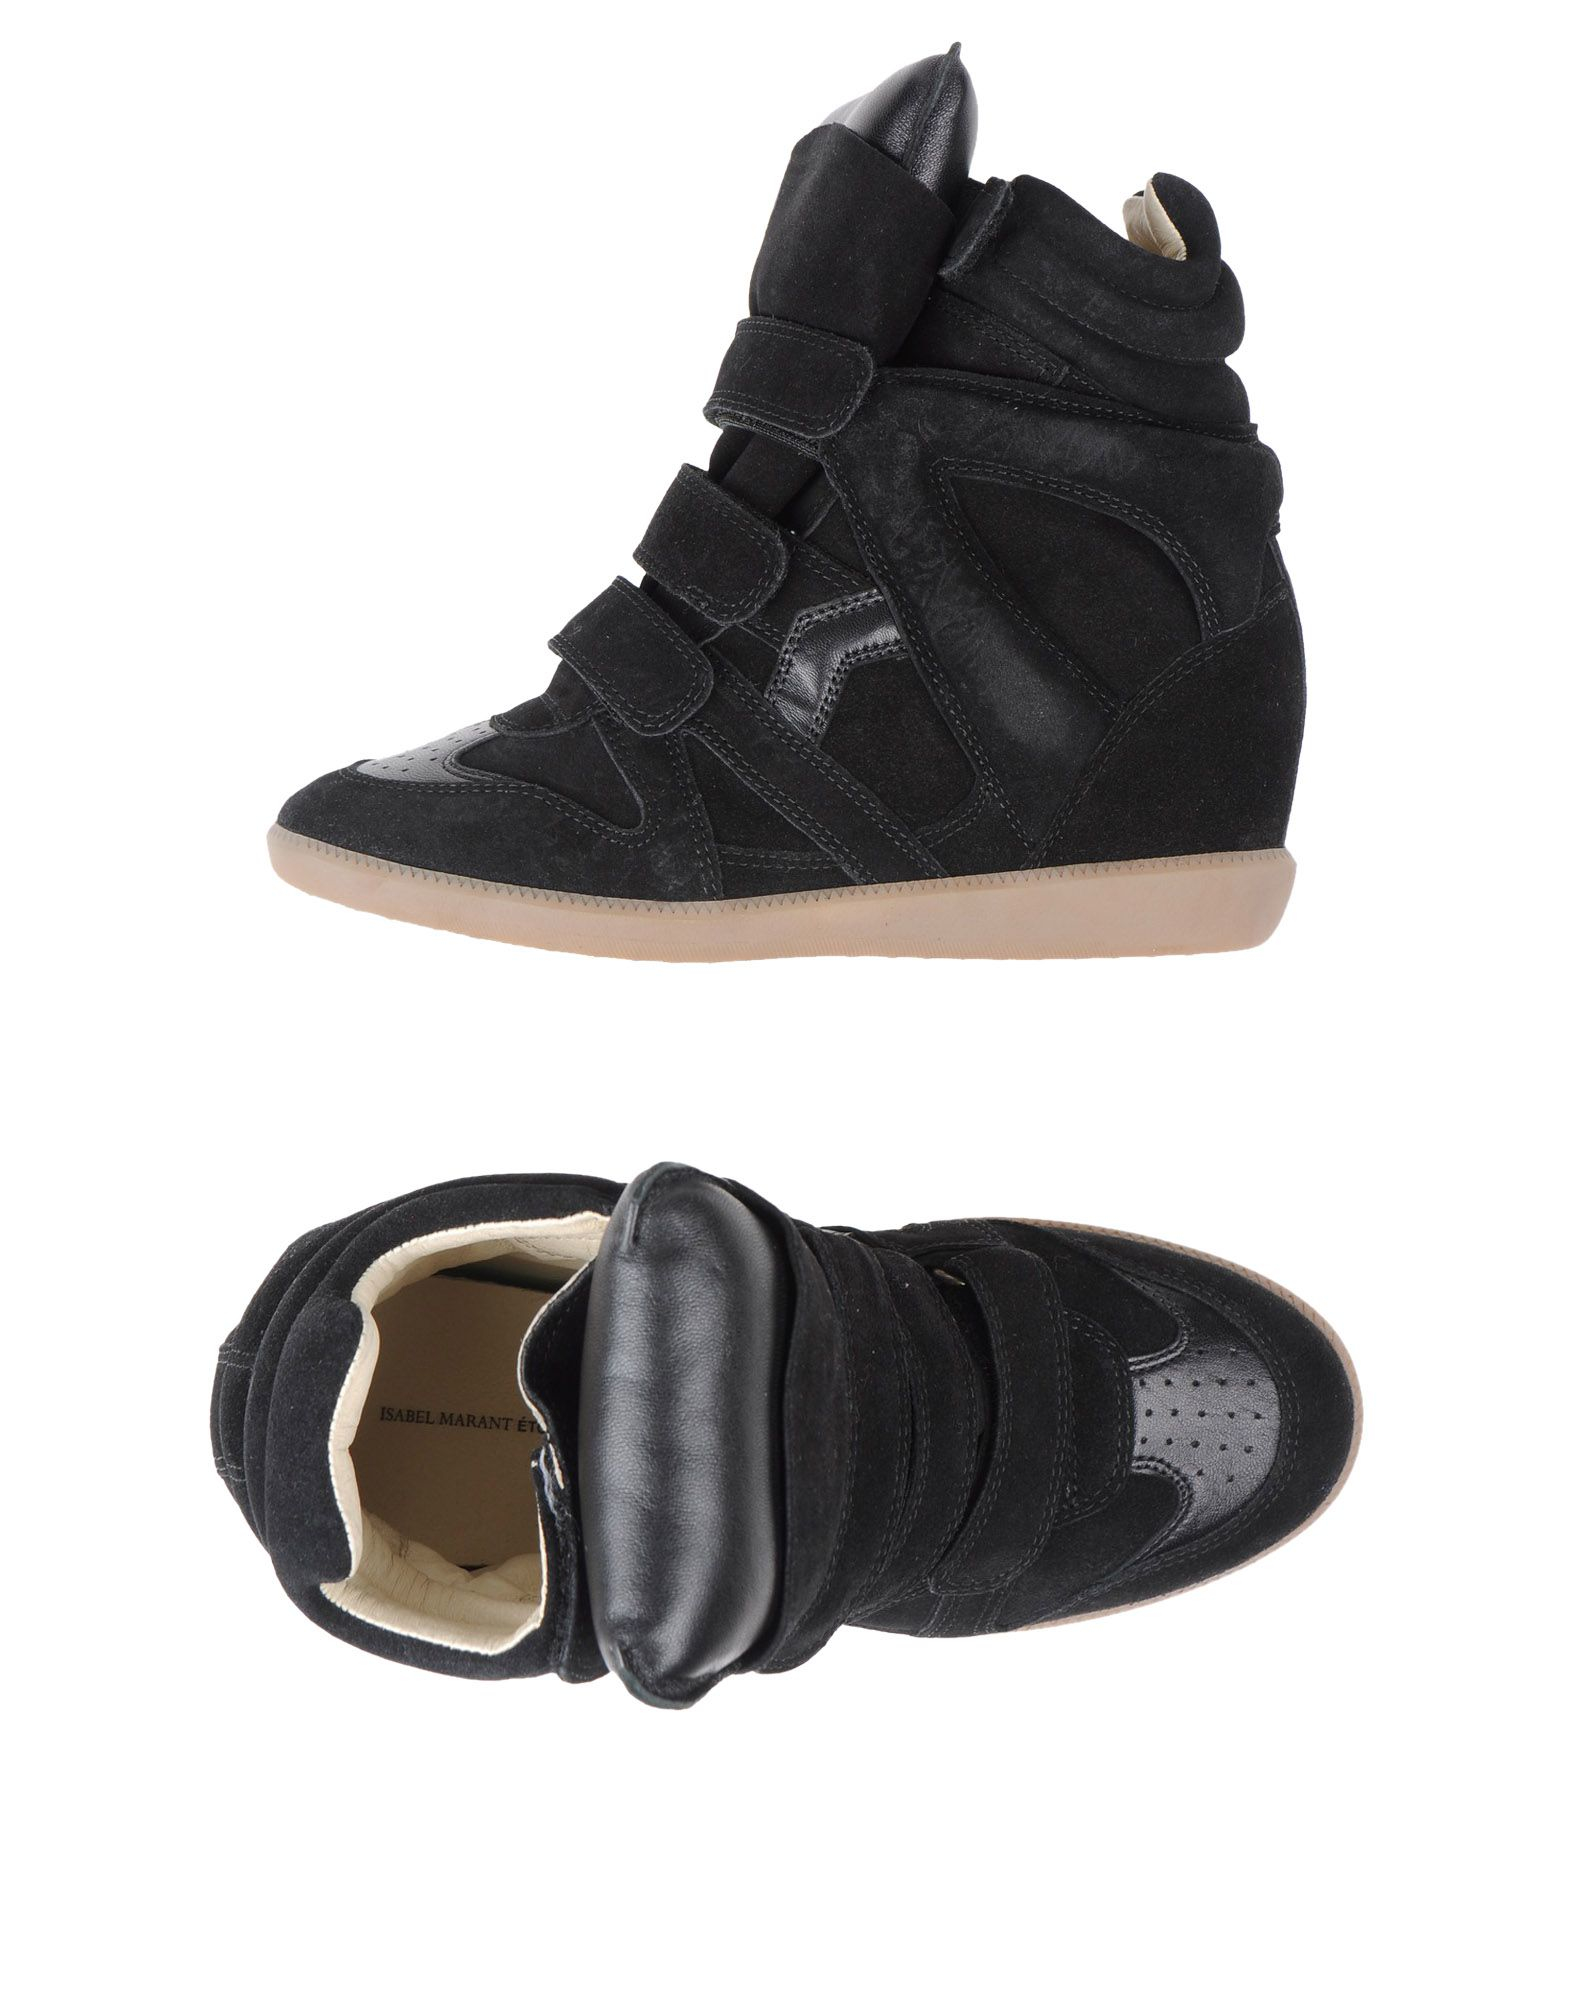 Isabel marant Bekett Sneaker in Black | Lyst